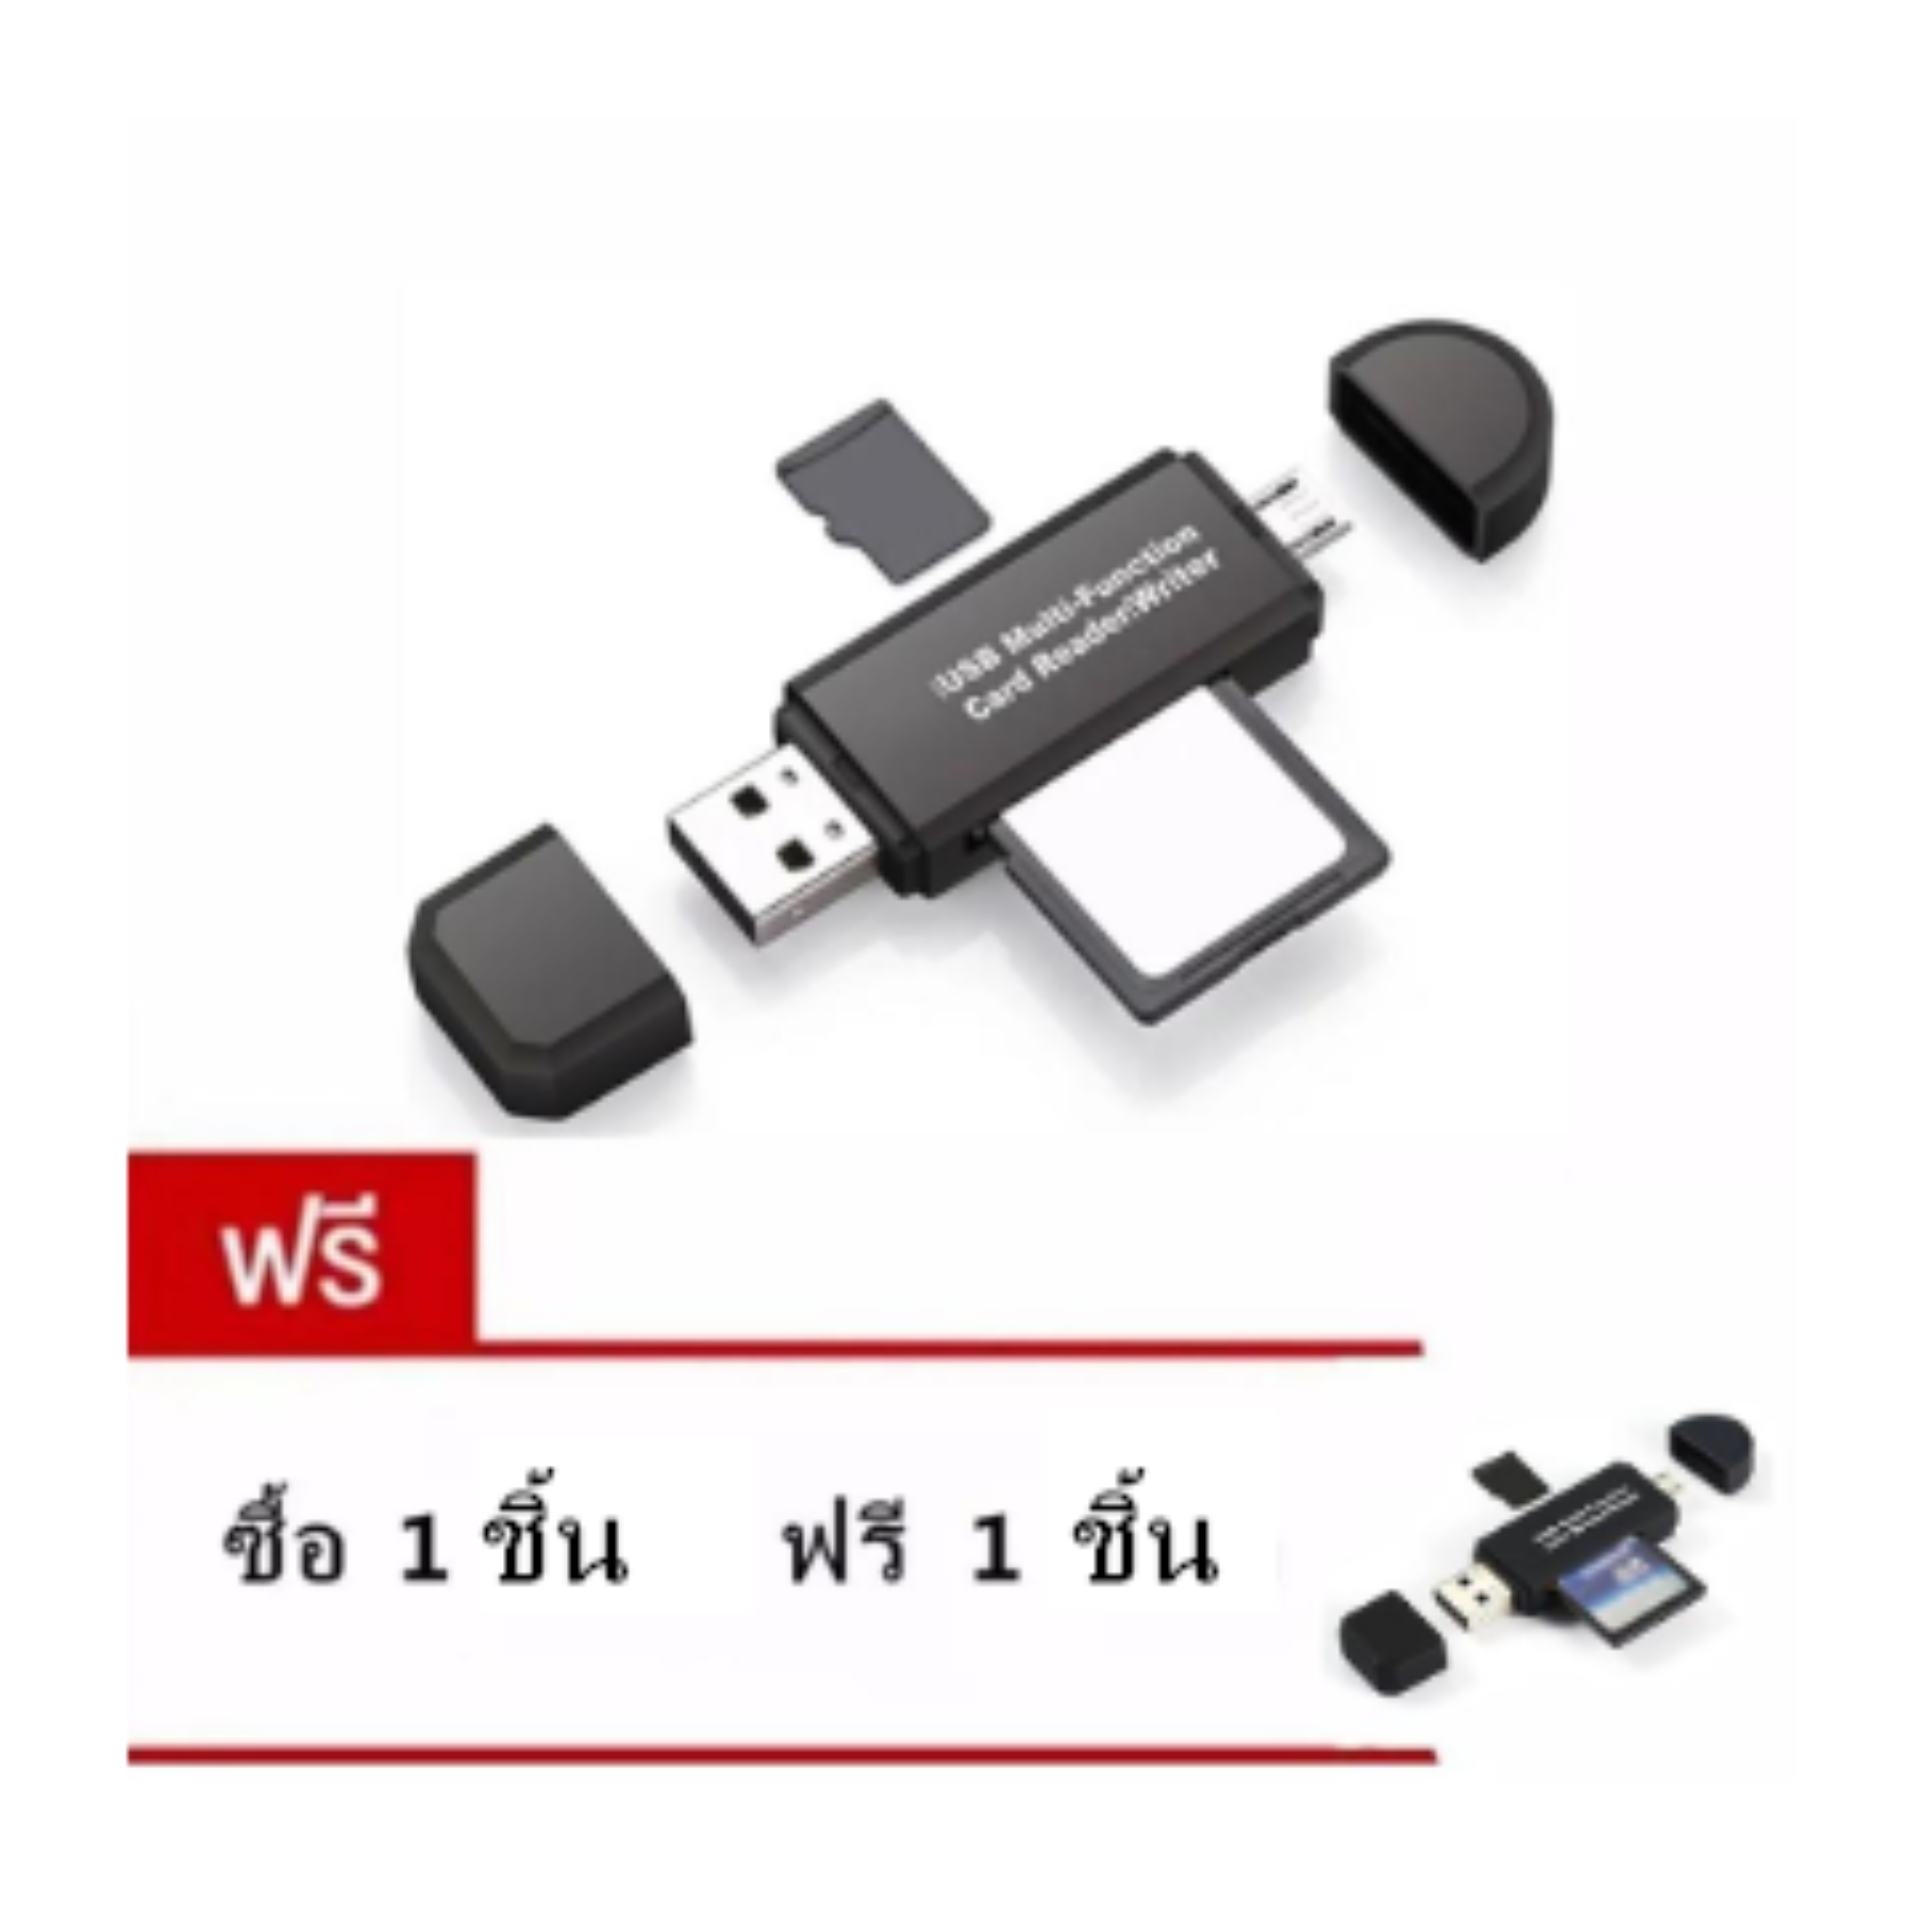 OTG Card Reader Micro SD/SD Card/USB TF ความเร็วสูง 2.0 Card Reader ซื้อ 1 แถม 1 ฟรี เครื่องอ่านการ์ด OTG